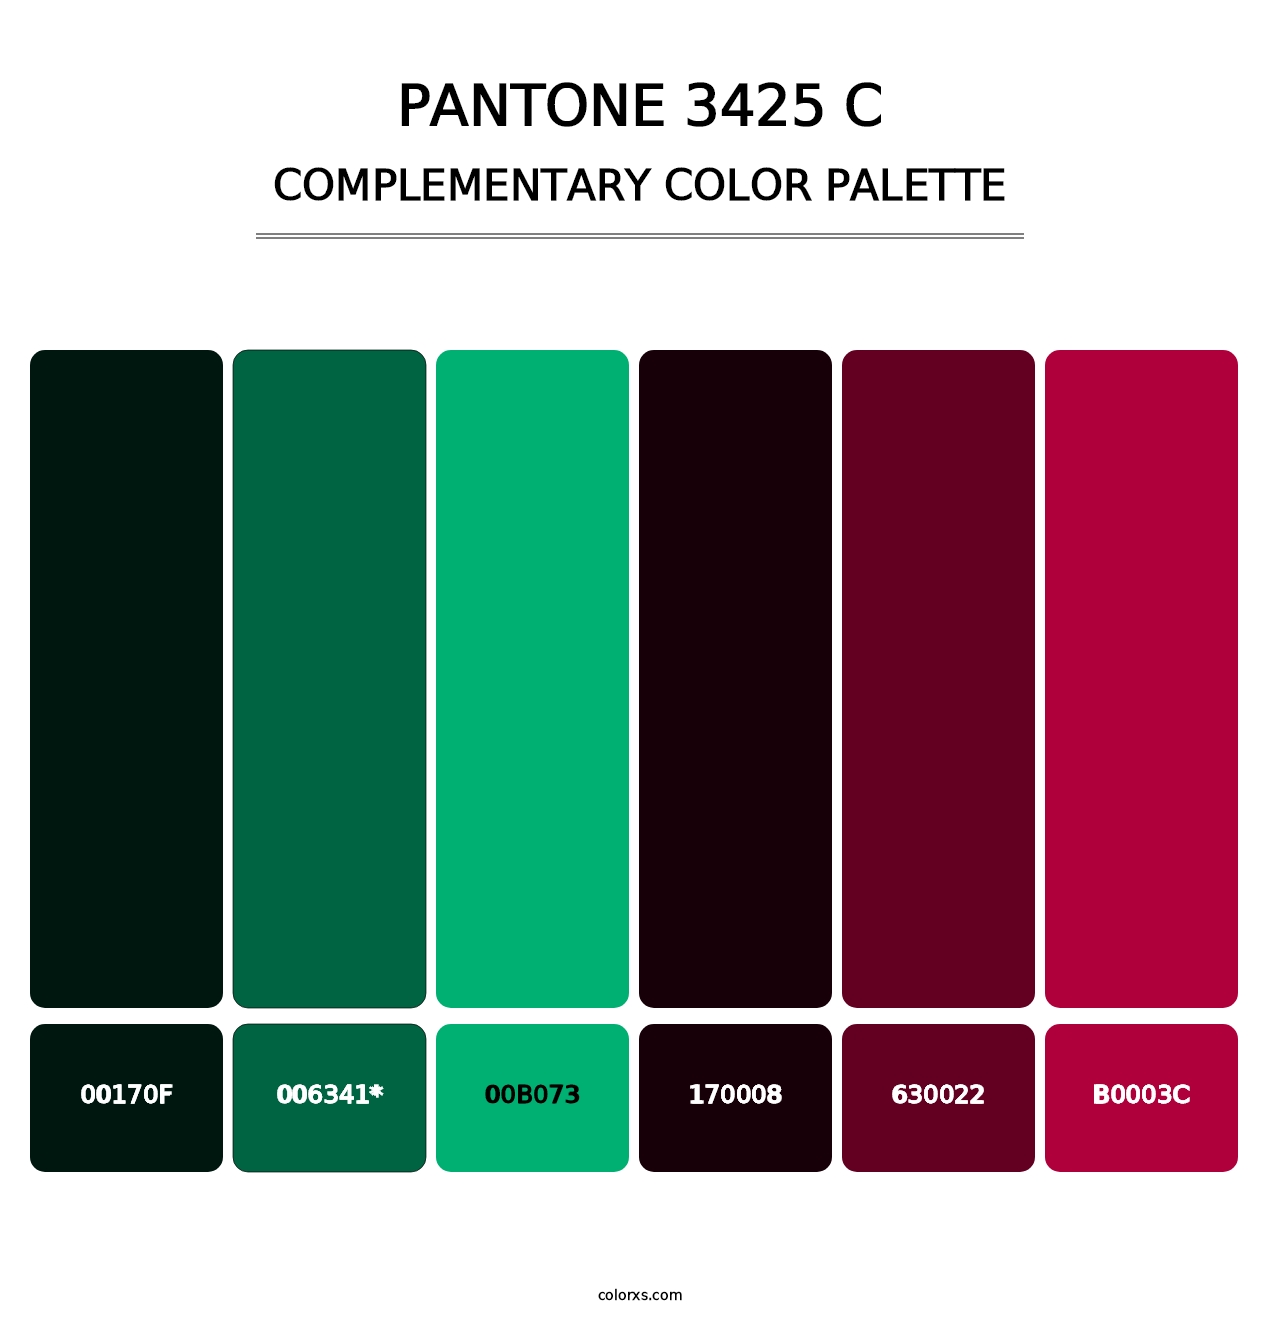 PANTONE 3425 C - Complementary Color Palette